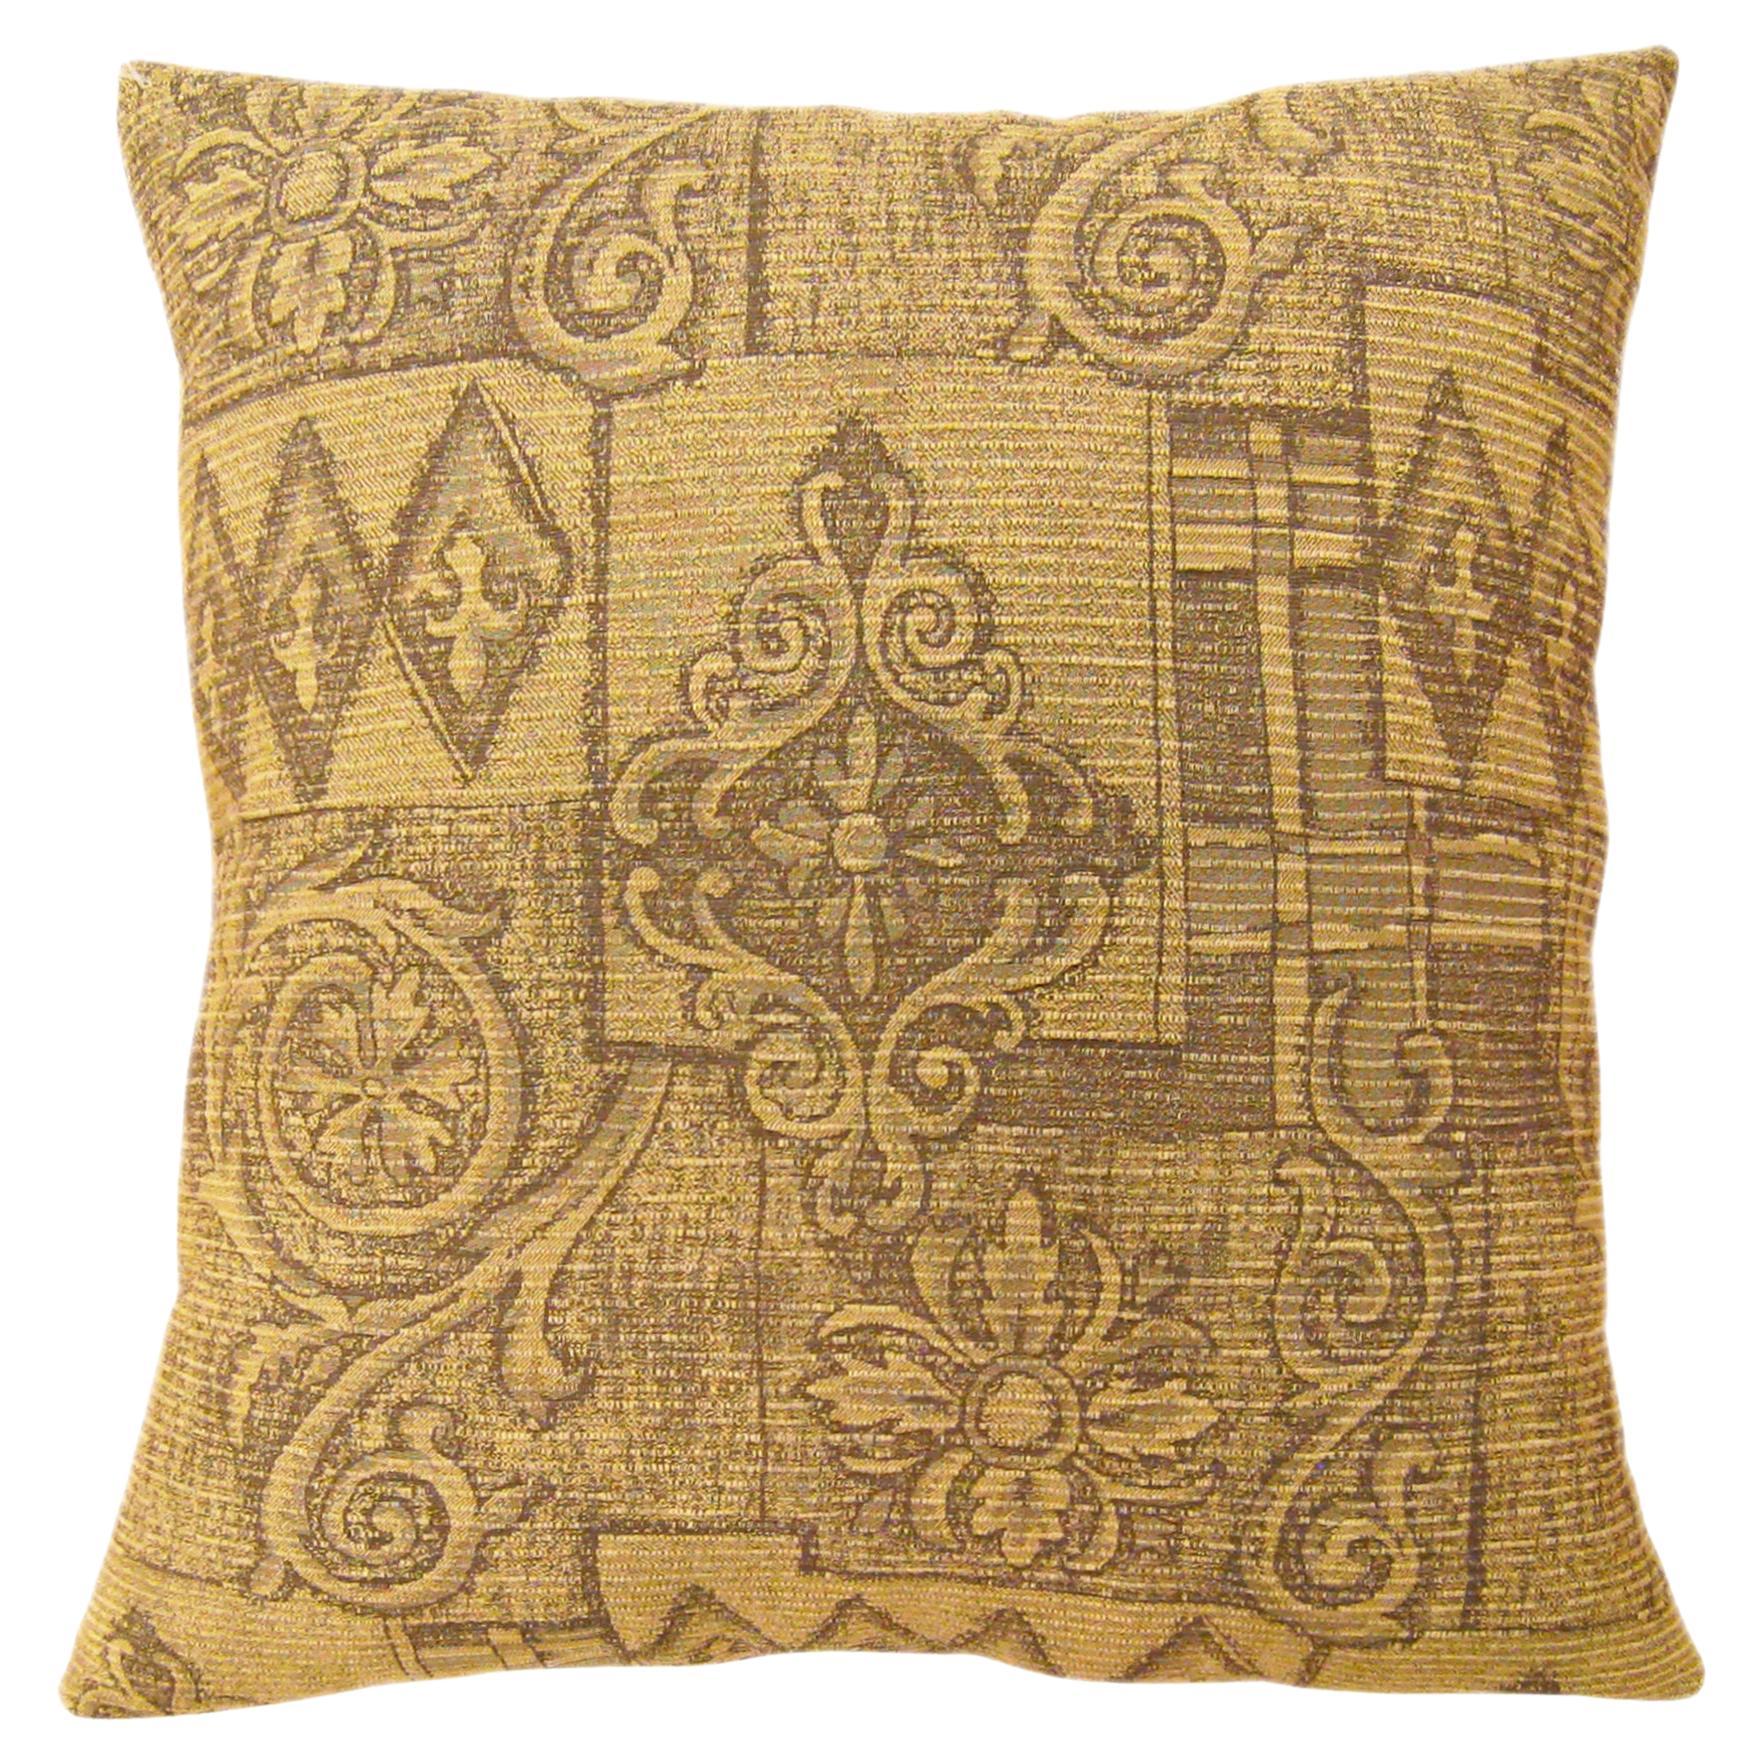 Decorative Vintage Floro-Geometric Fabric Pillow